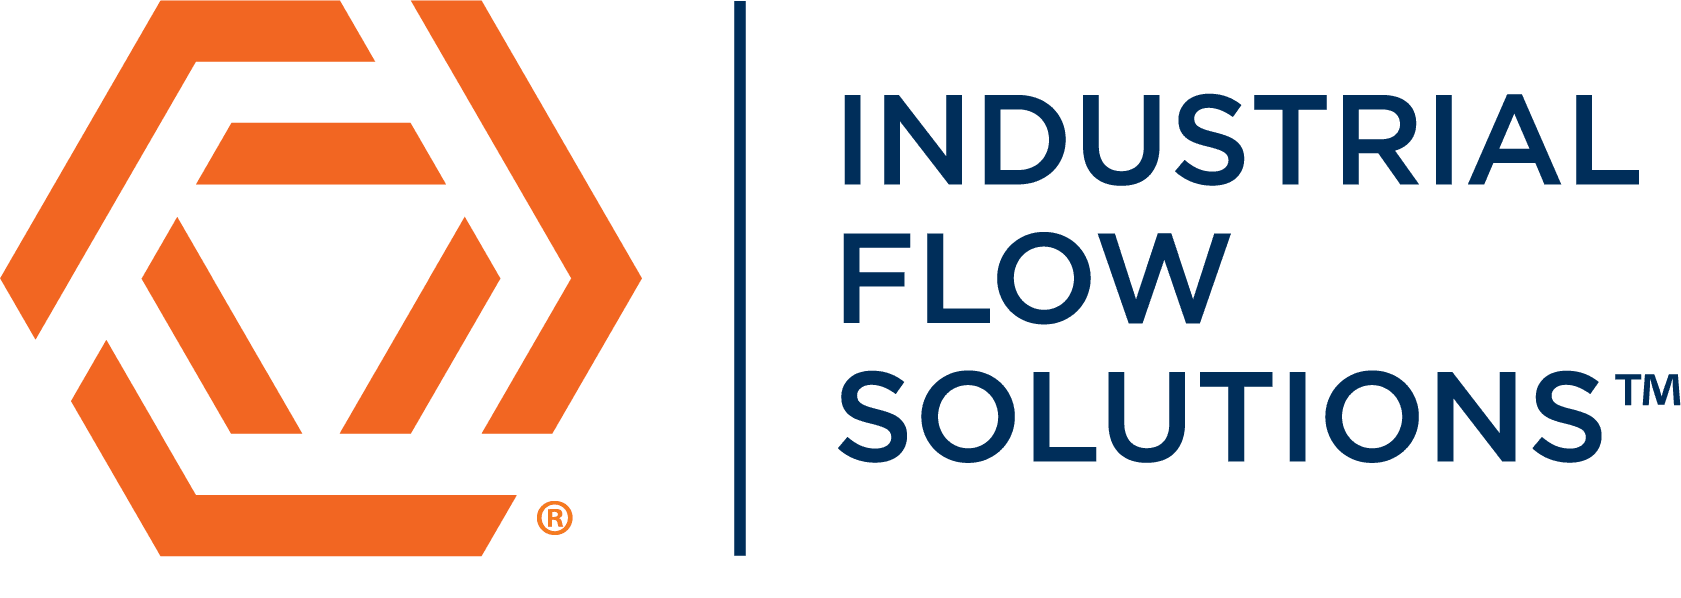 industrial_flow_solutions